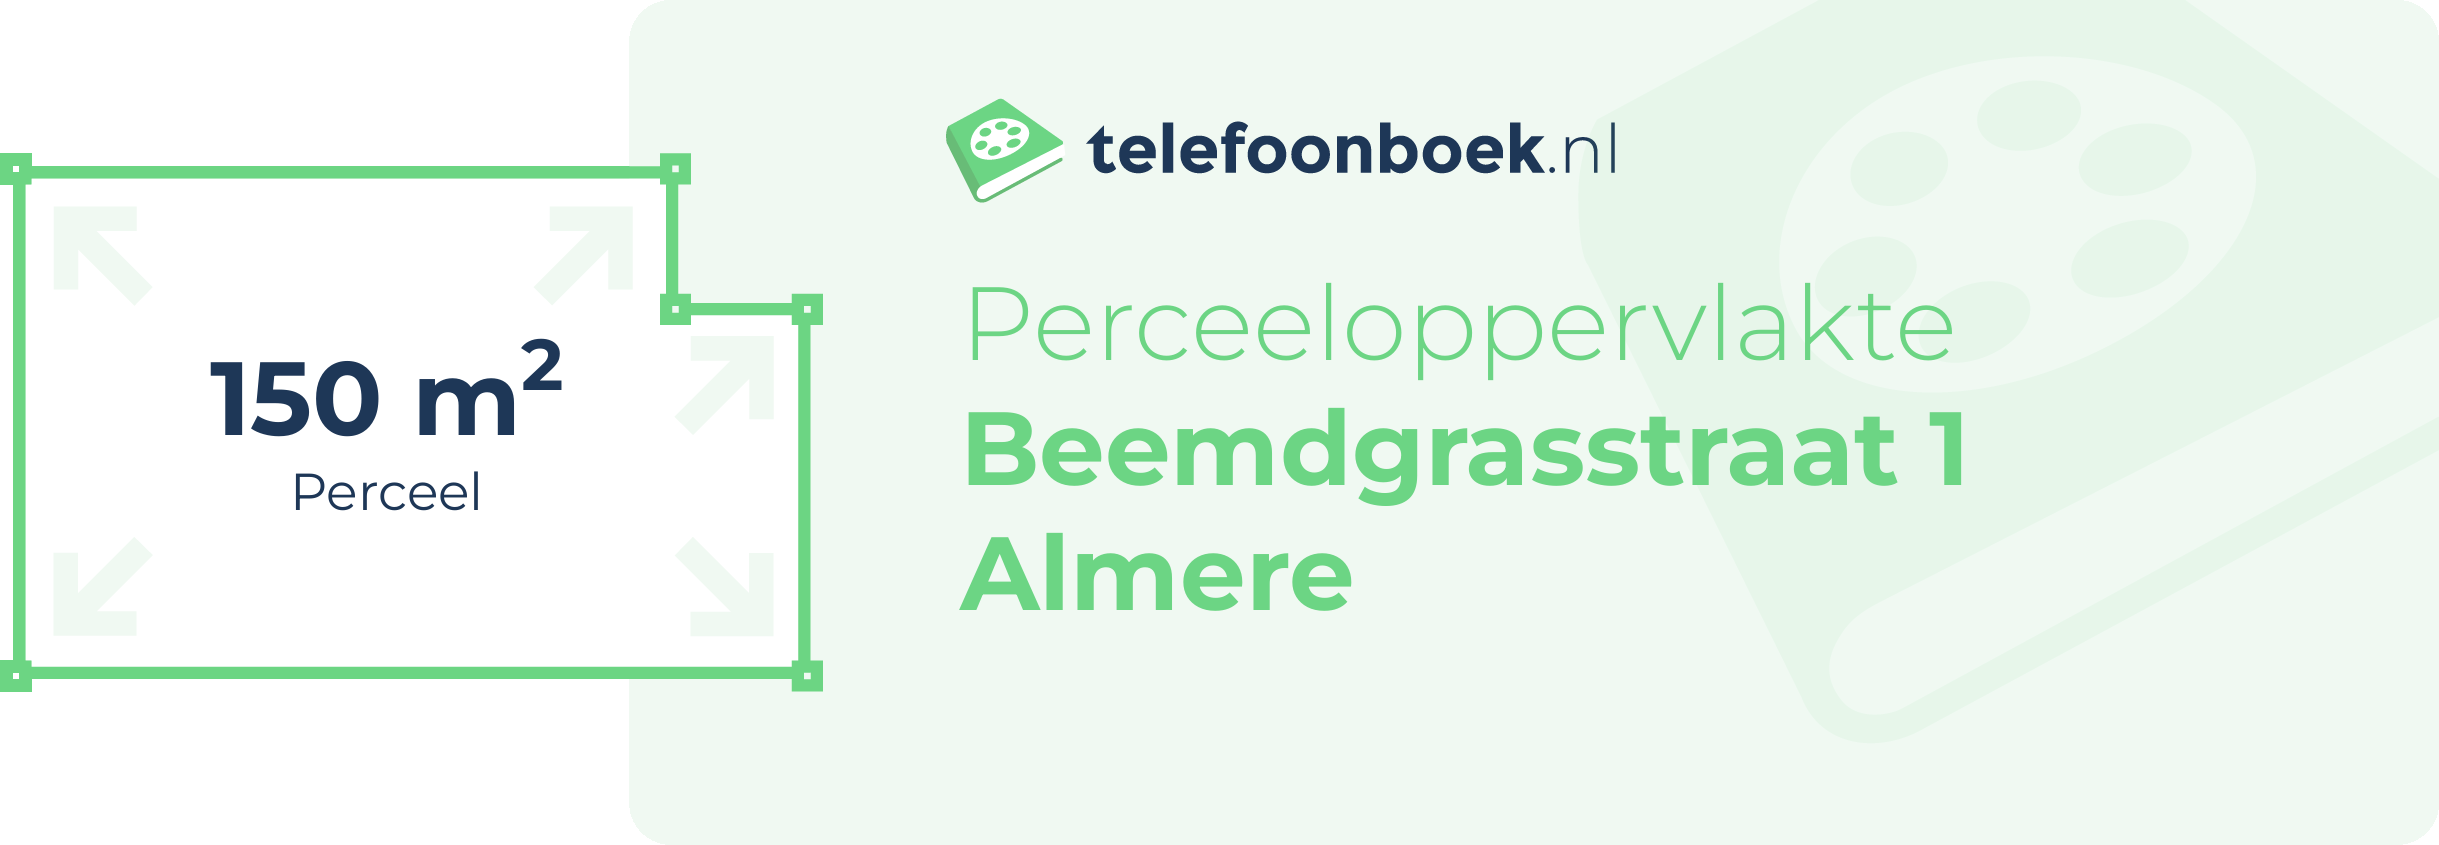 Perceeloppervlakte Beemdgrasstraat 1 Almere